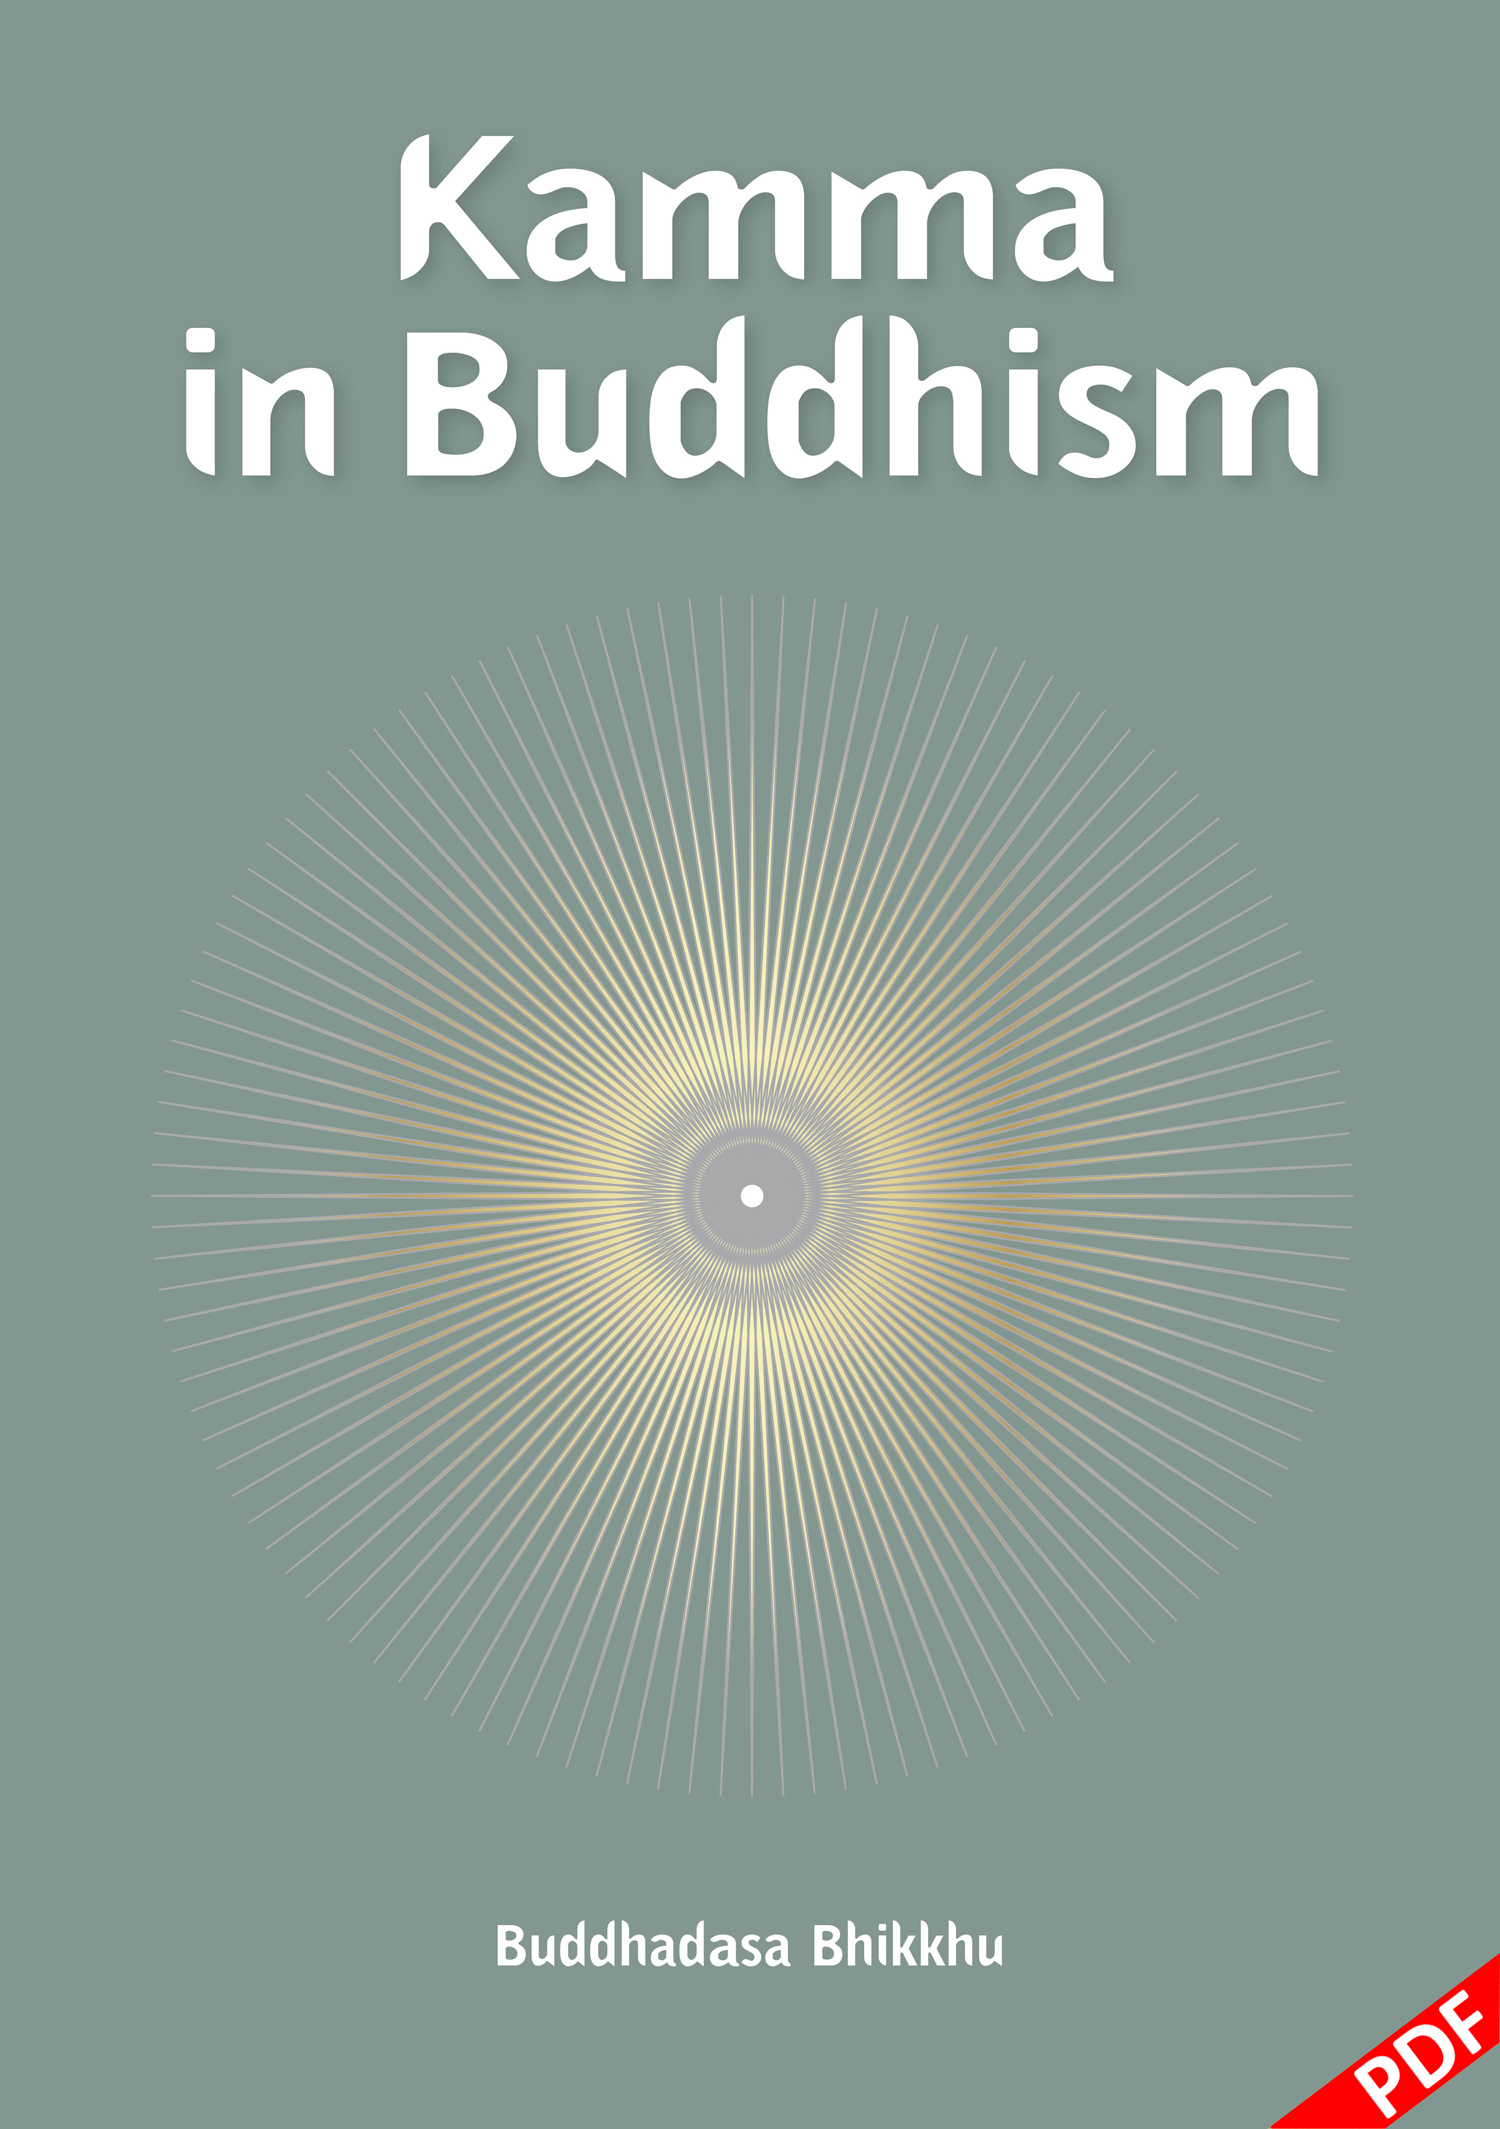 1kamma in buddhism